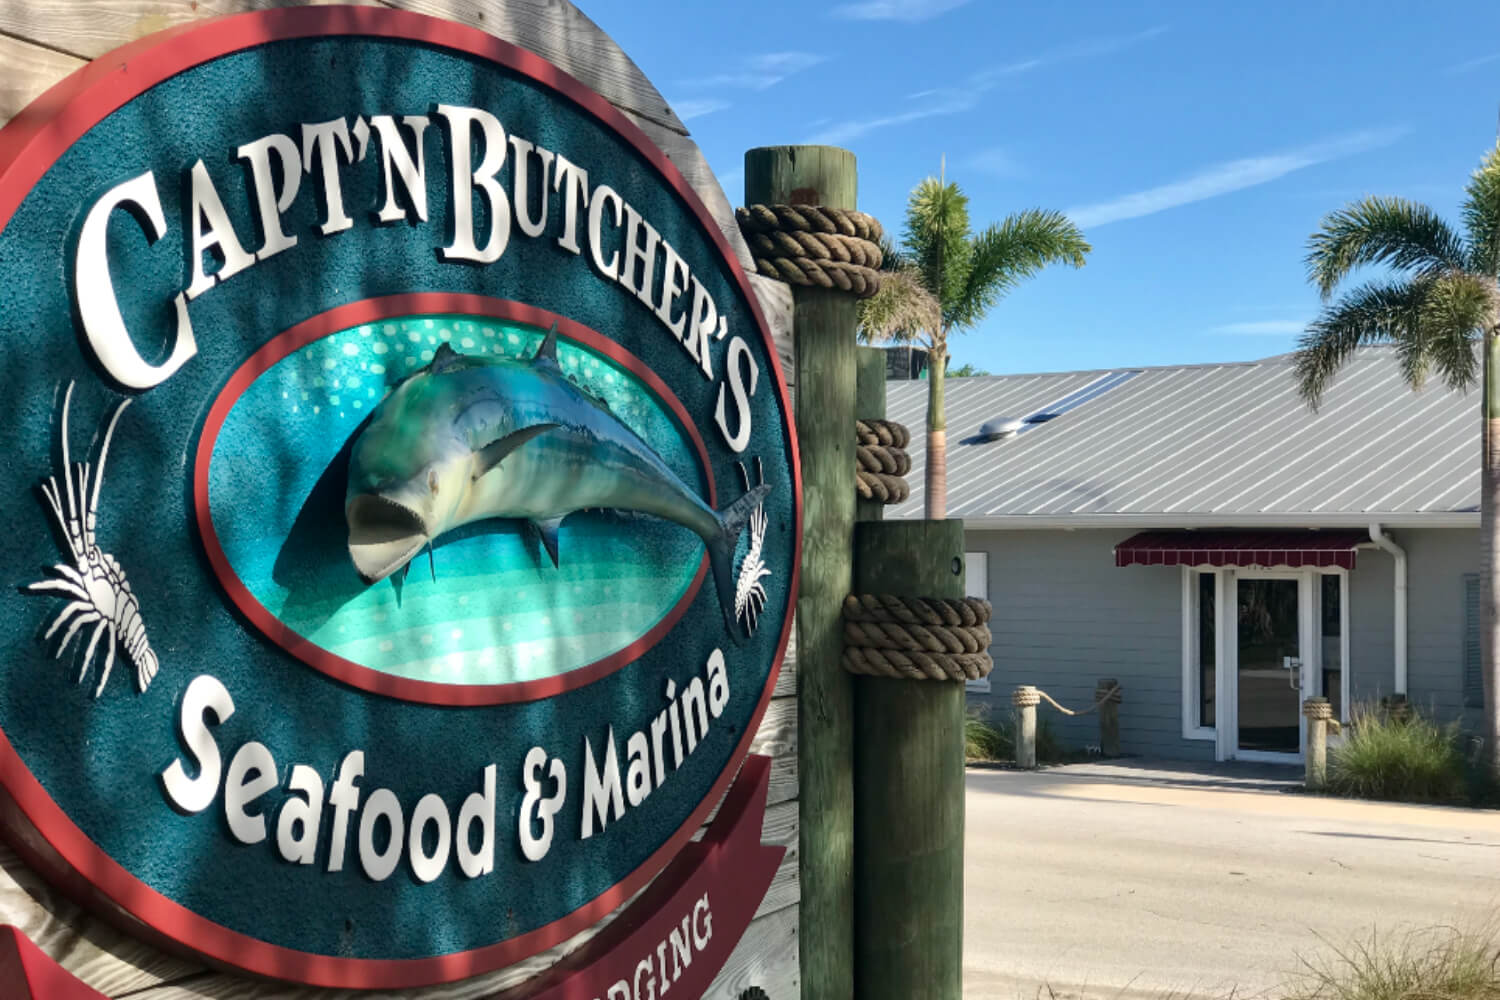 Capt’n Butcher’s Seafood Grill & Bar